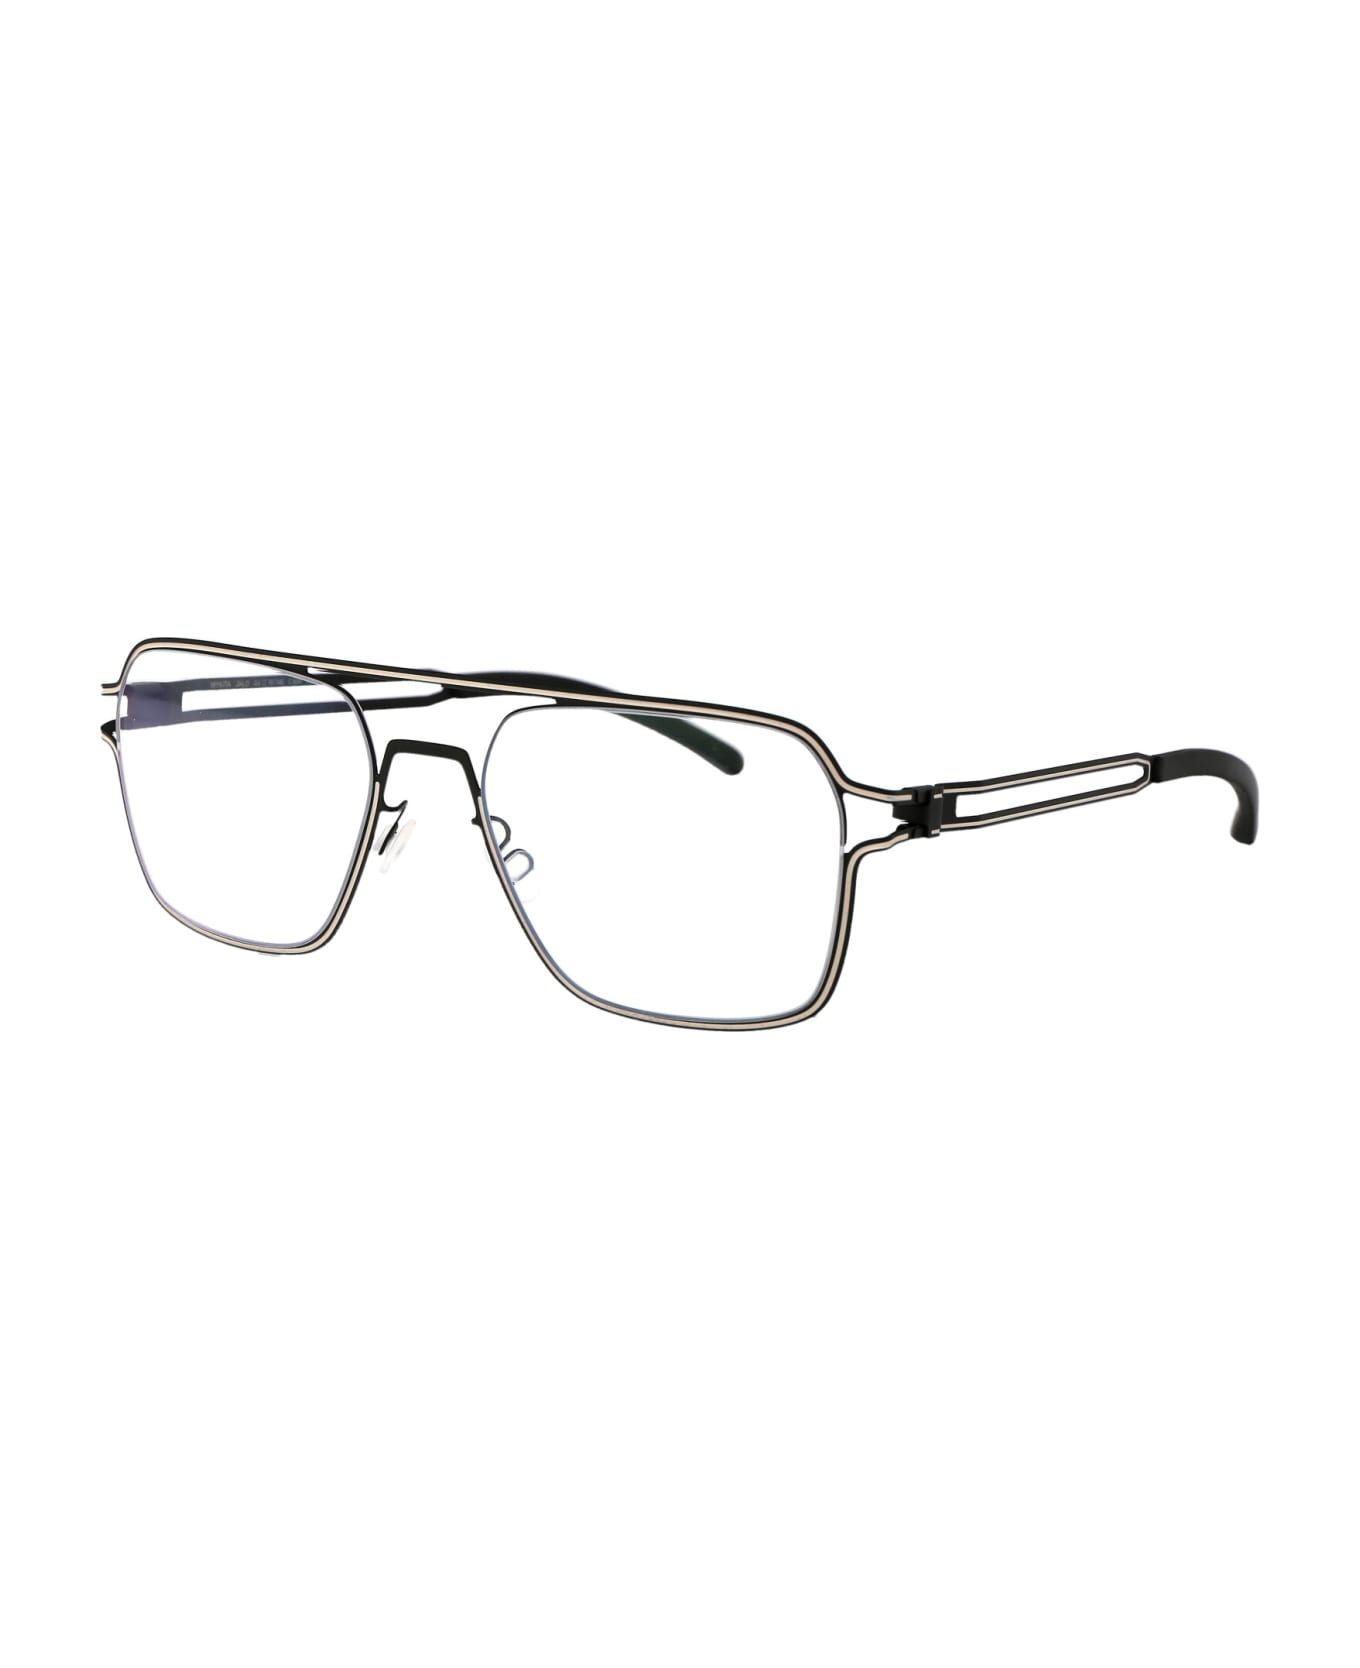 Mykita Jalo Glasses - 634 Black Light Warm Grey|Clear